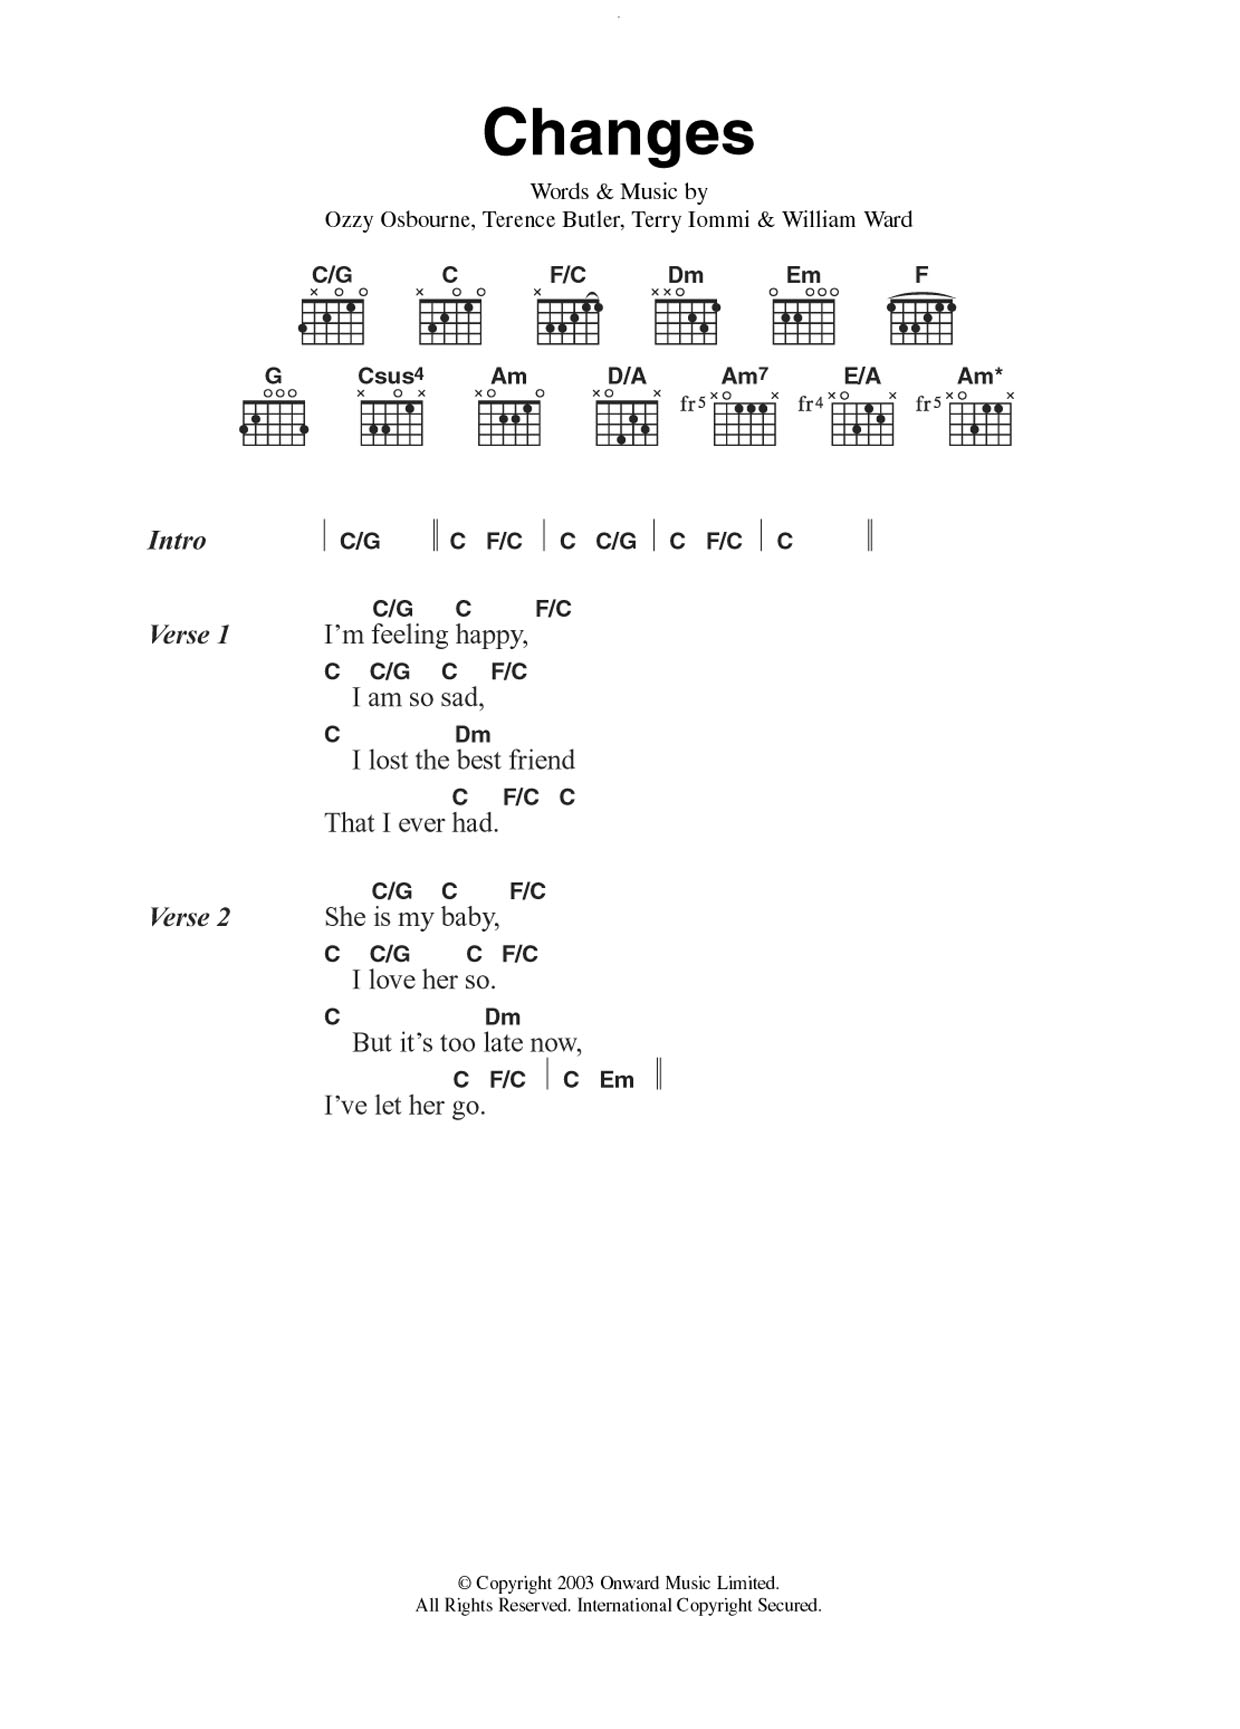 Ozzy Osbourne Changes Sheet Music Notes & Chords for Guitar Chords/Lyrics - Download or Print PDF